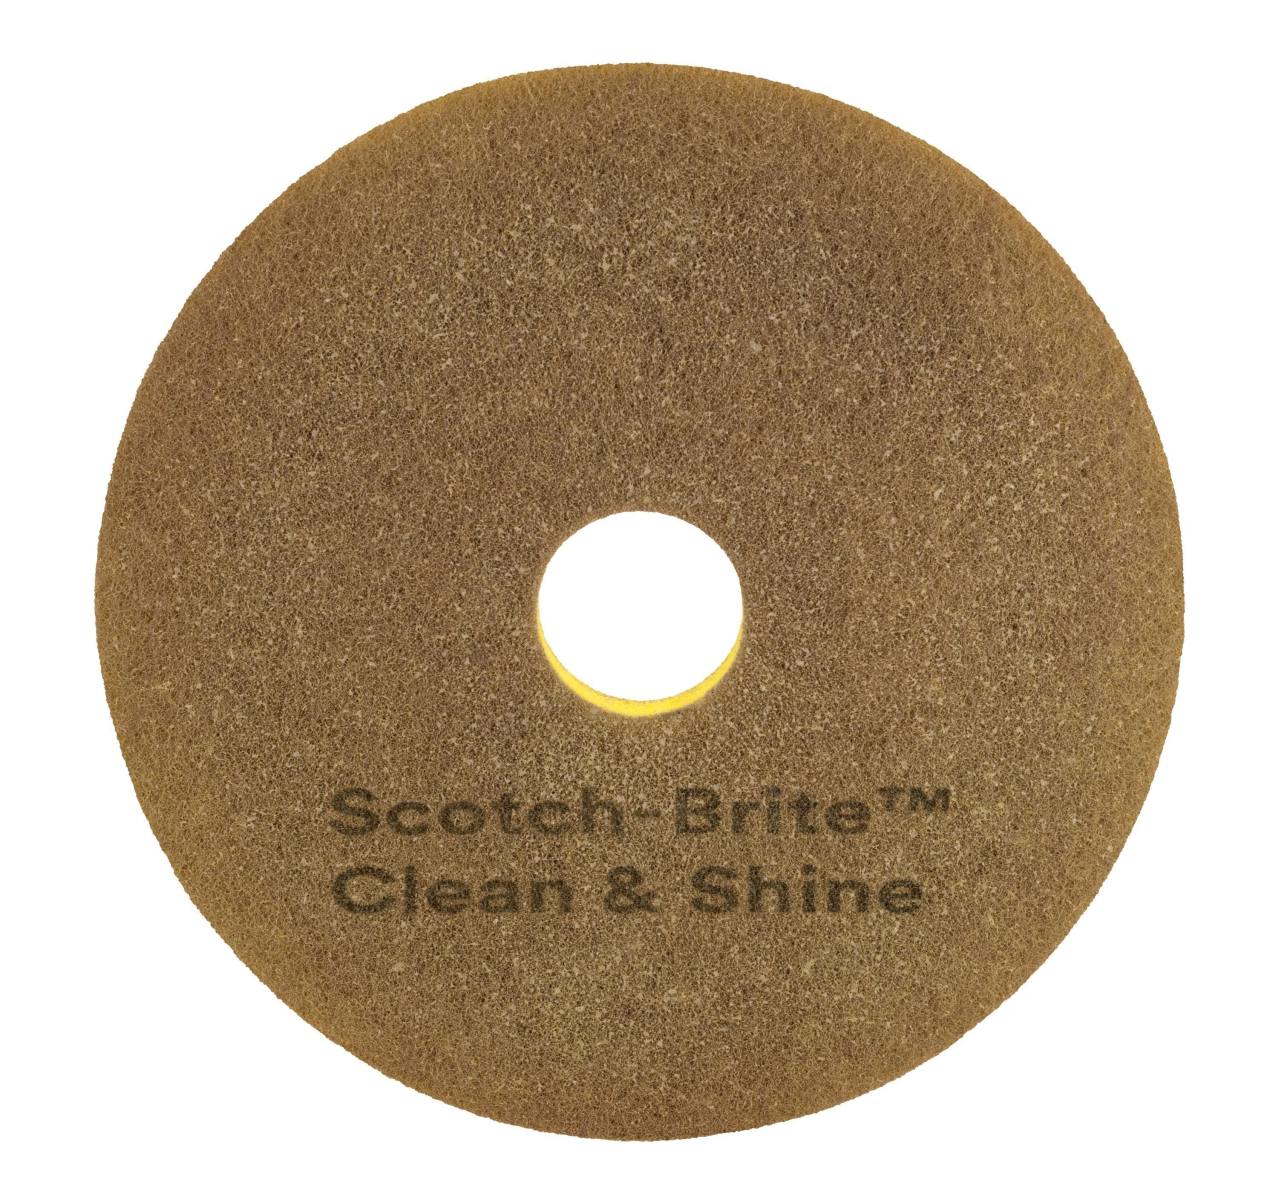 3M Scotch-Brite Clean & Shine Maschinenpad, 380 mm, 5 Stück / Karton